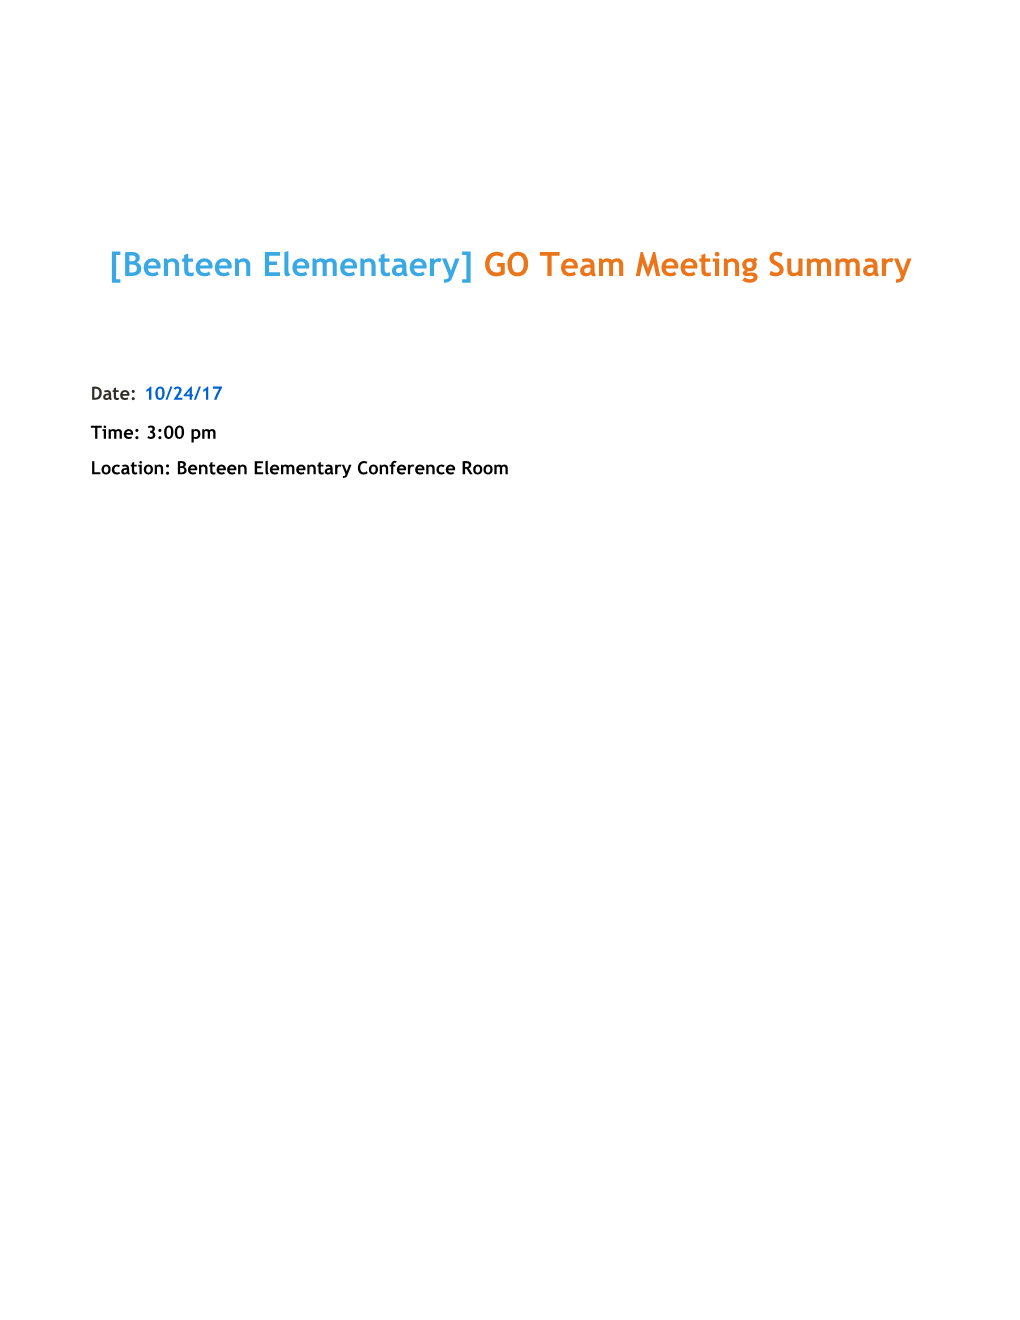 Benteen Elementaery GO Team Meeting Summary